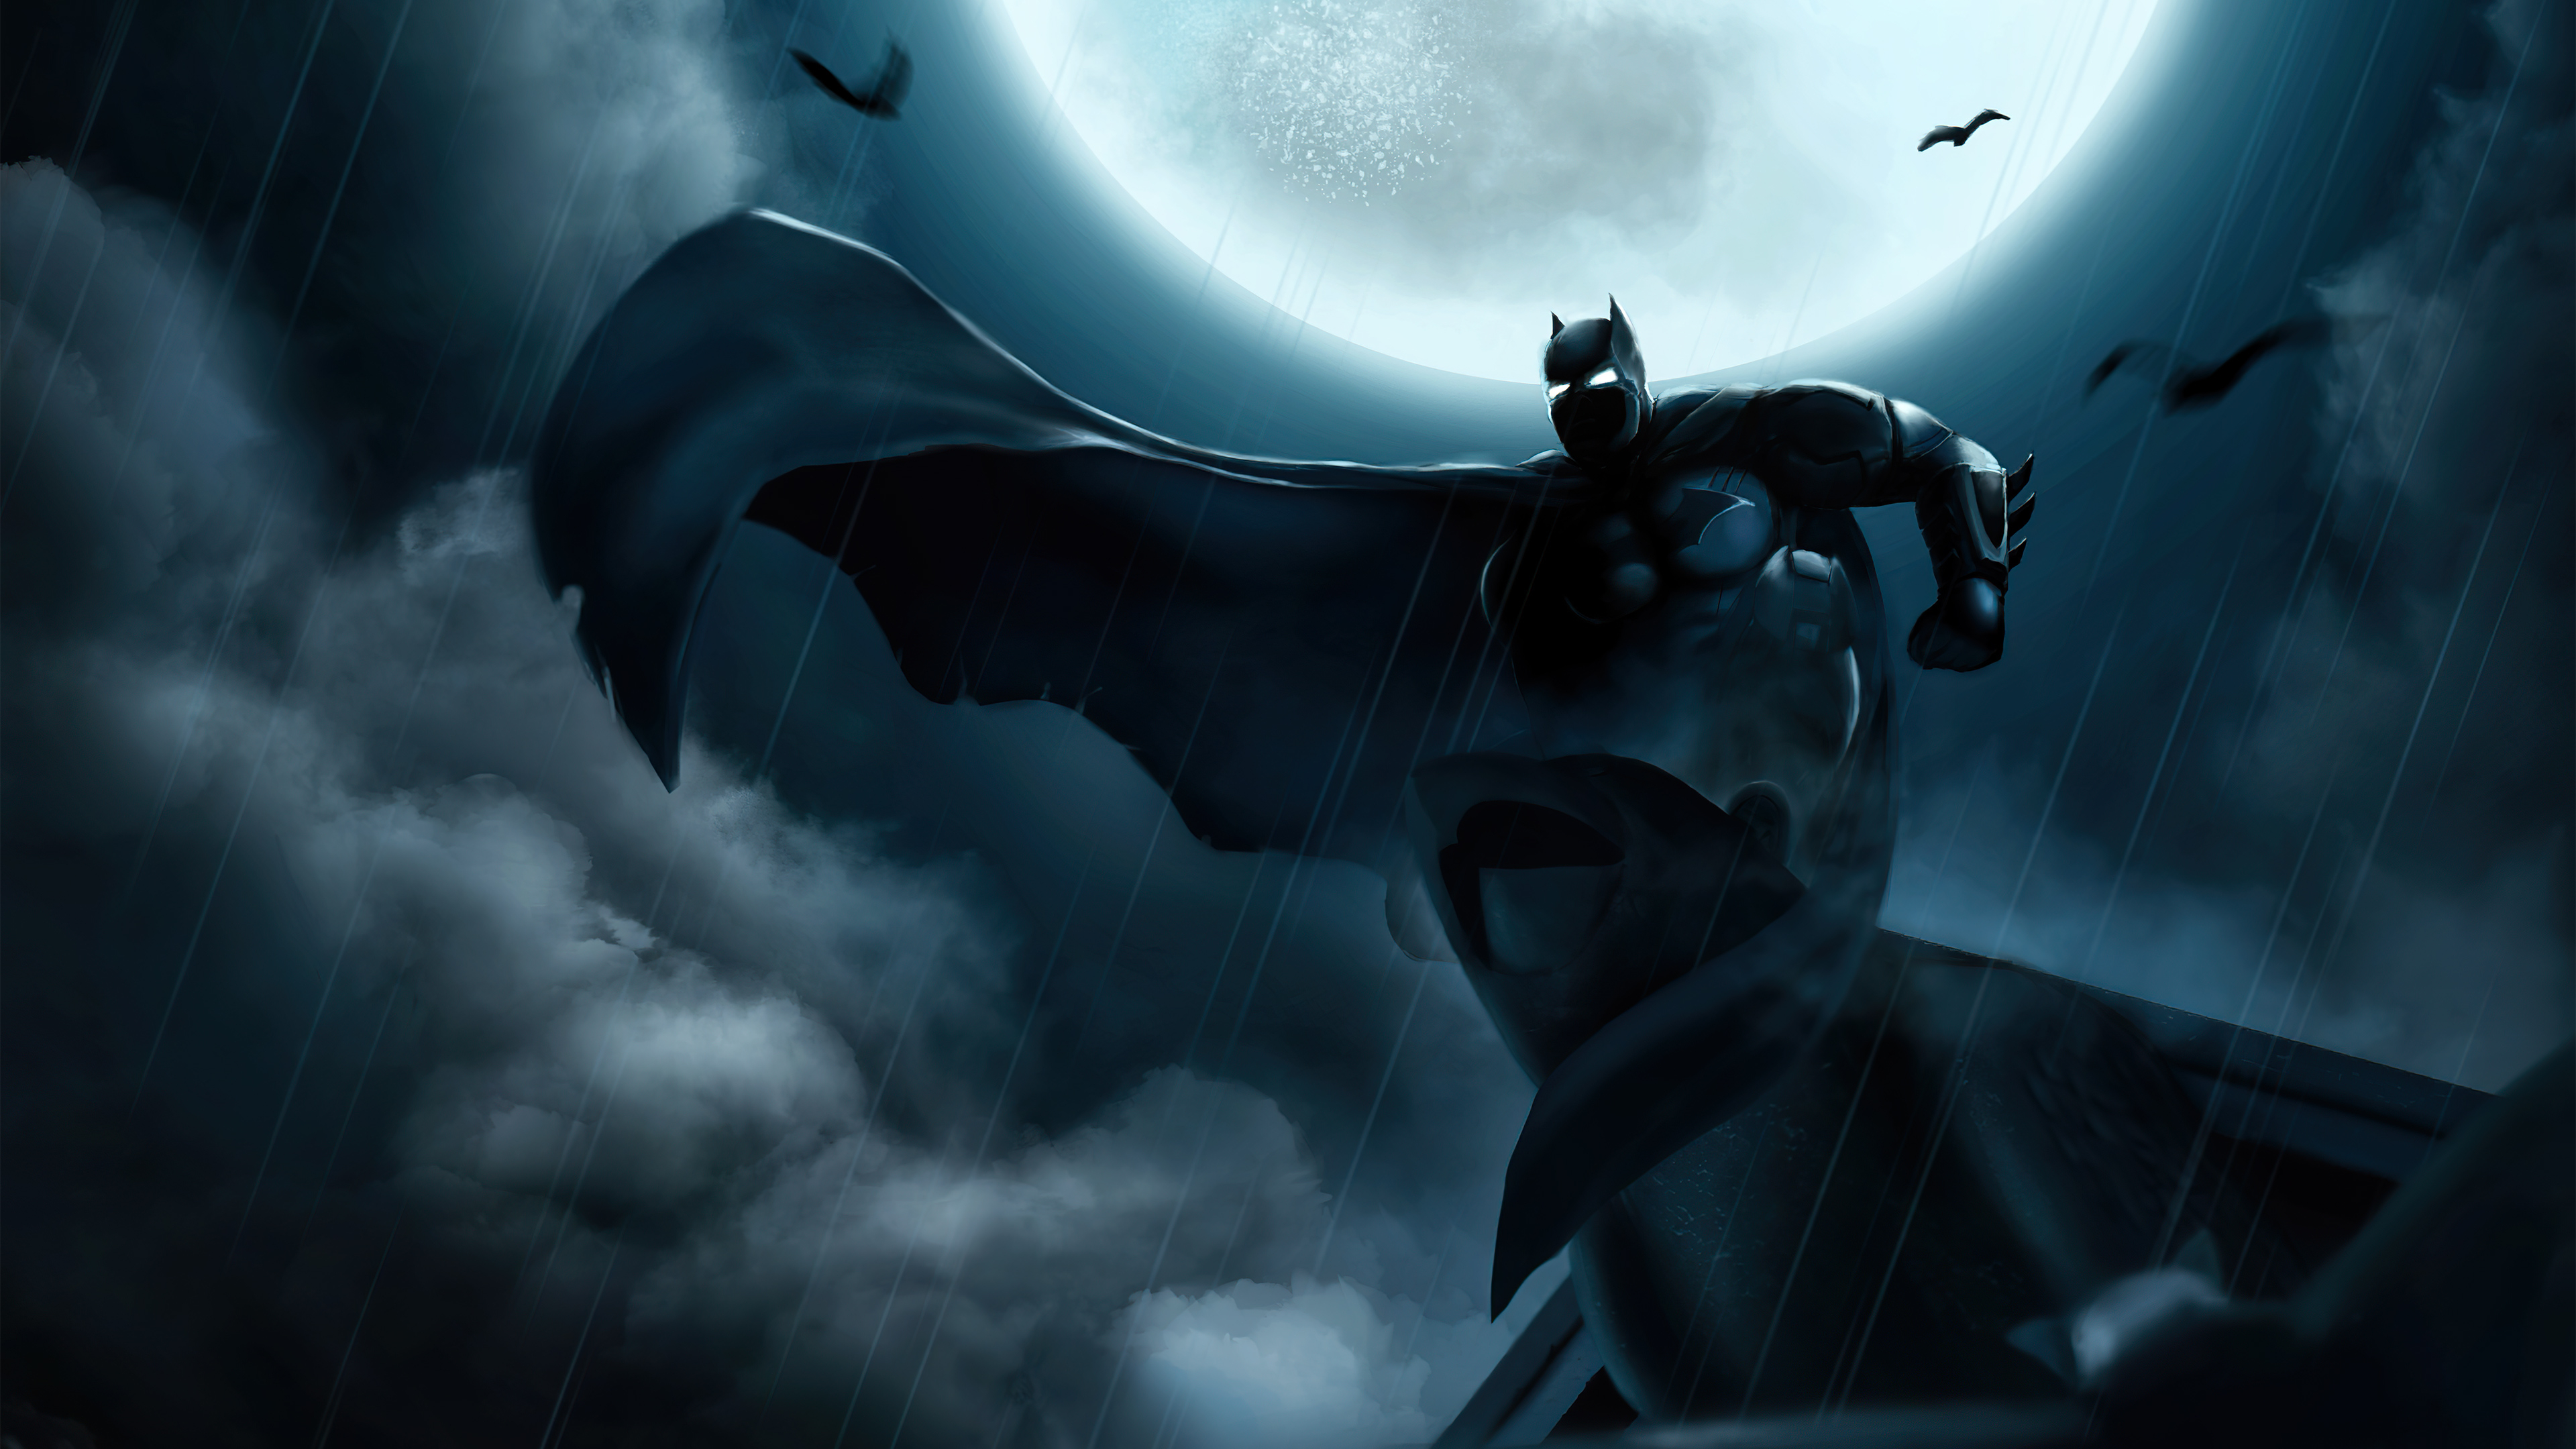 DC Batman 4k Superhero 2021 Wallpaper, HD Superheroes 4K Wallpapers, Images,  Photos and Background - Wallpapers Den